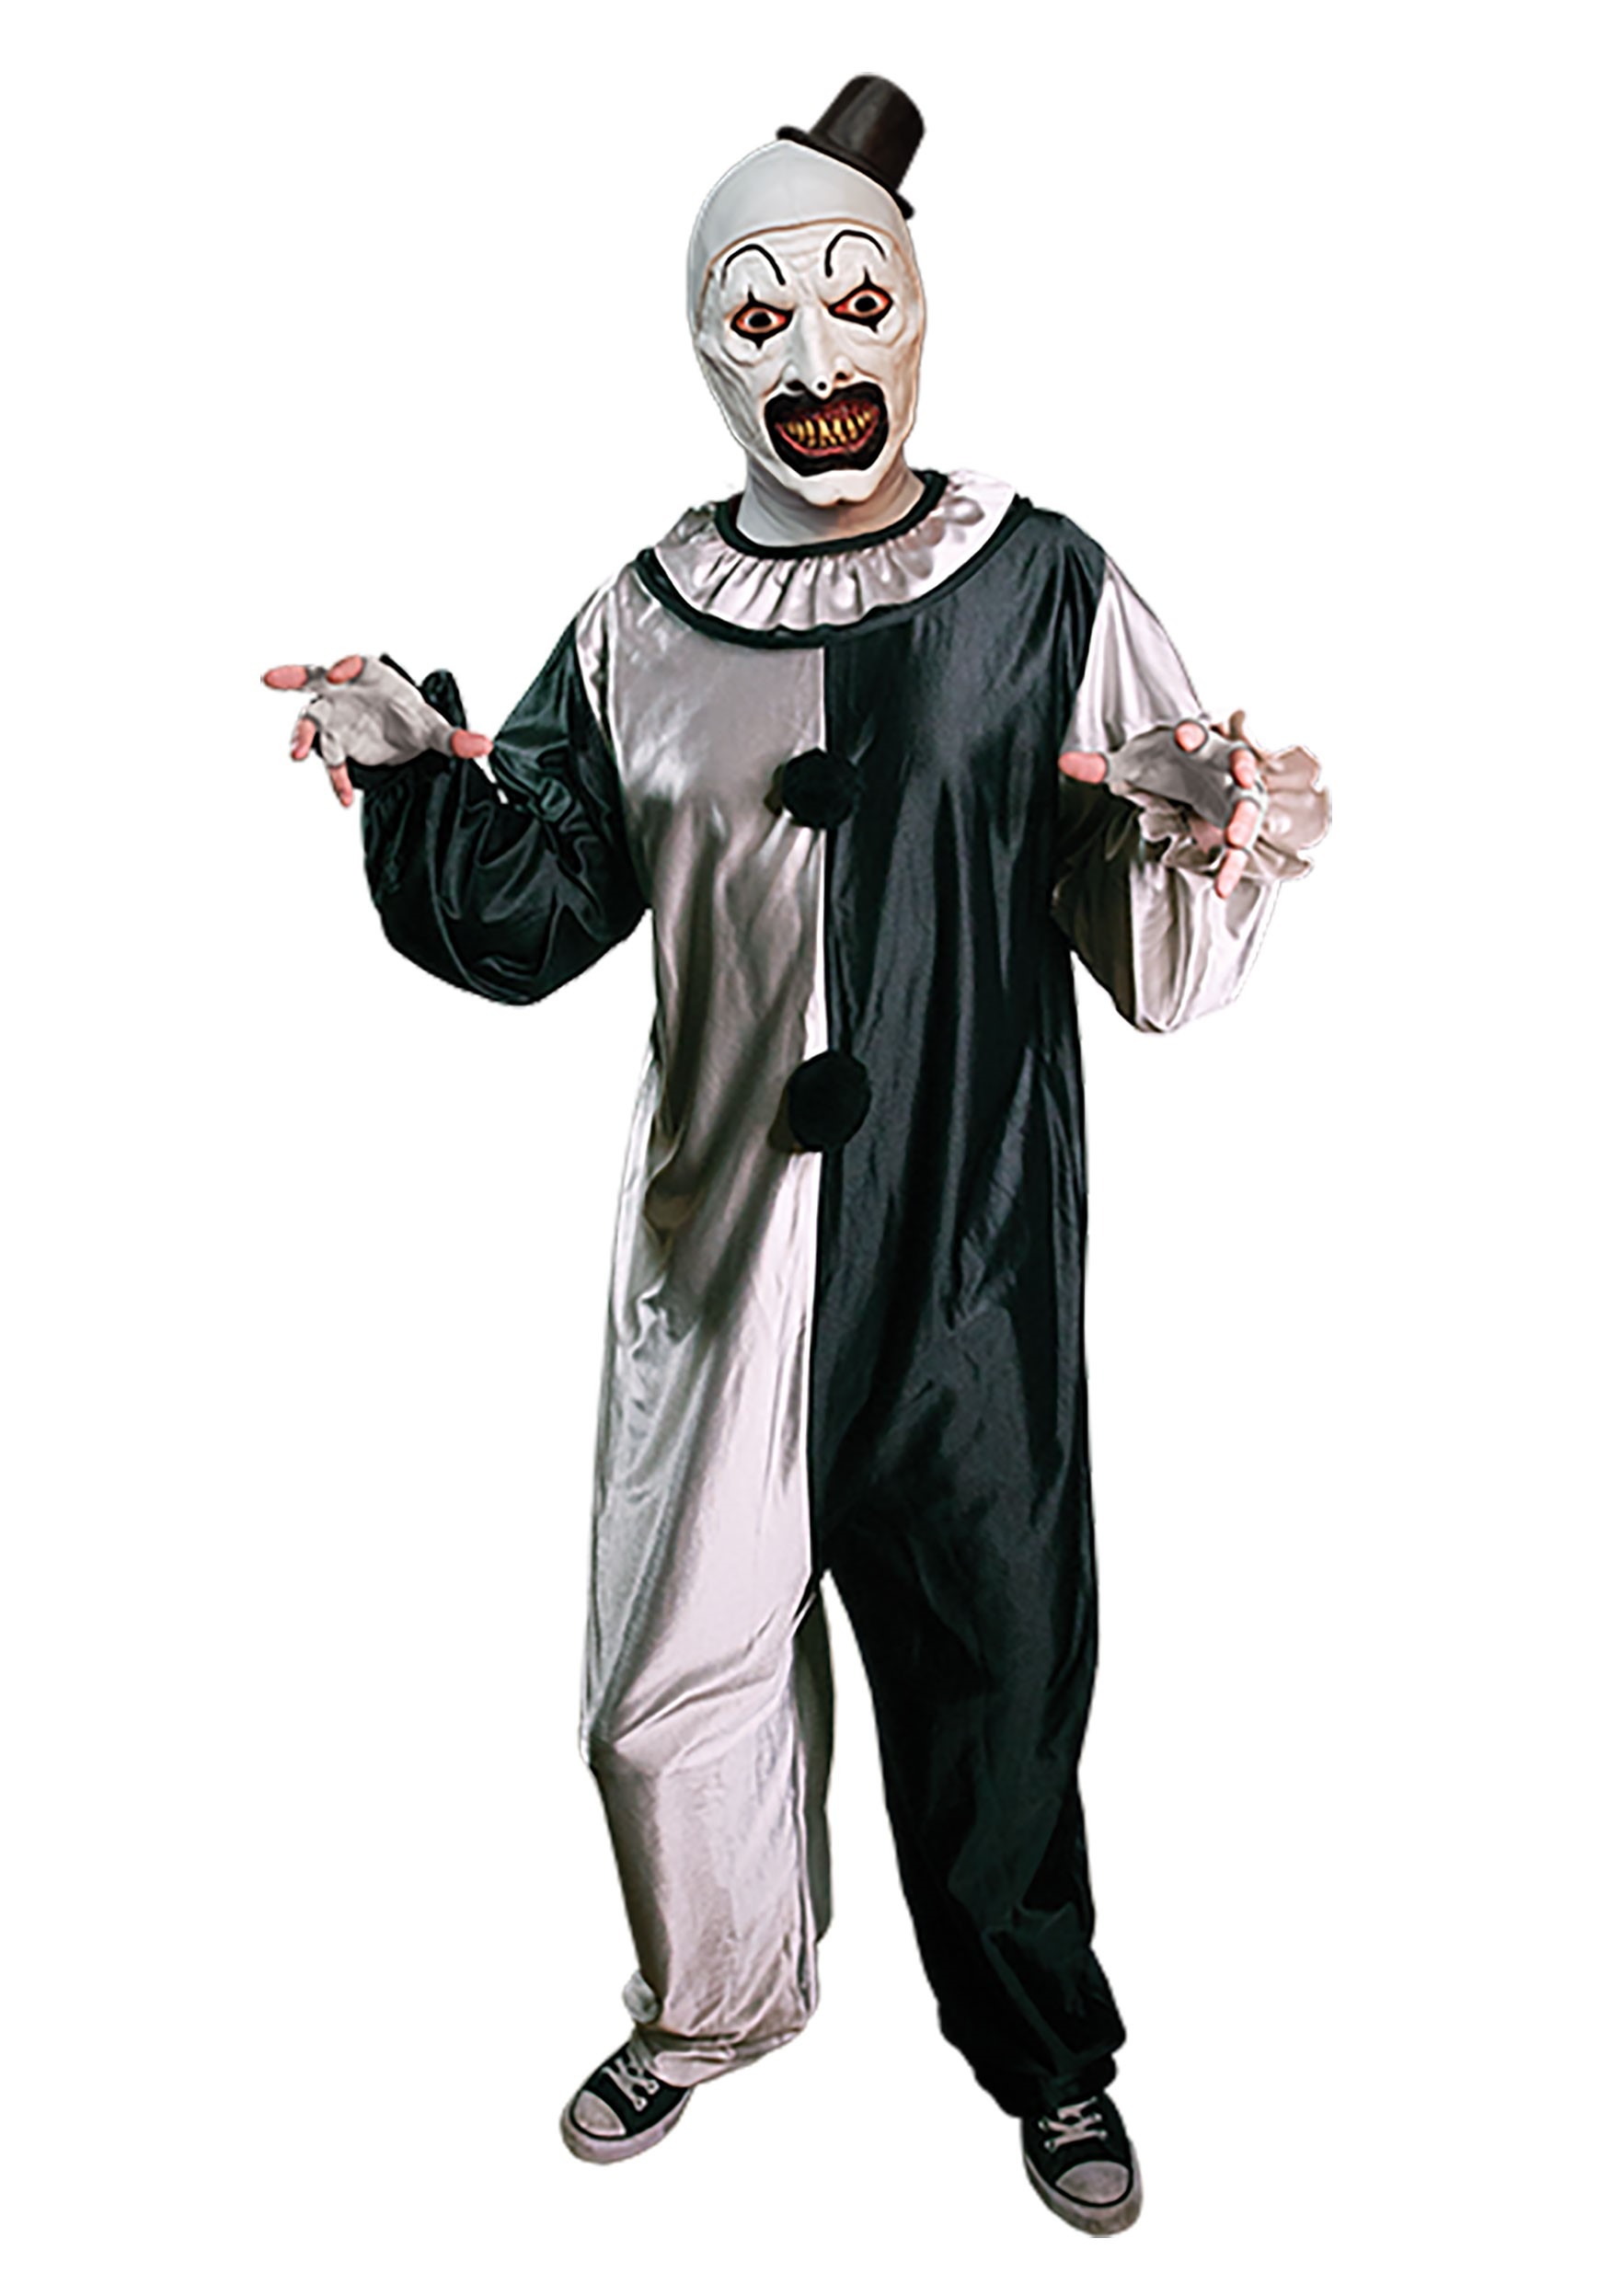 Terrifier 2 Art The Clown Actor Art The Clown The Scariest Clown In Horror Bodhiwasuen